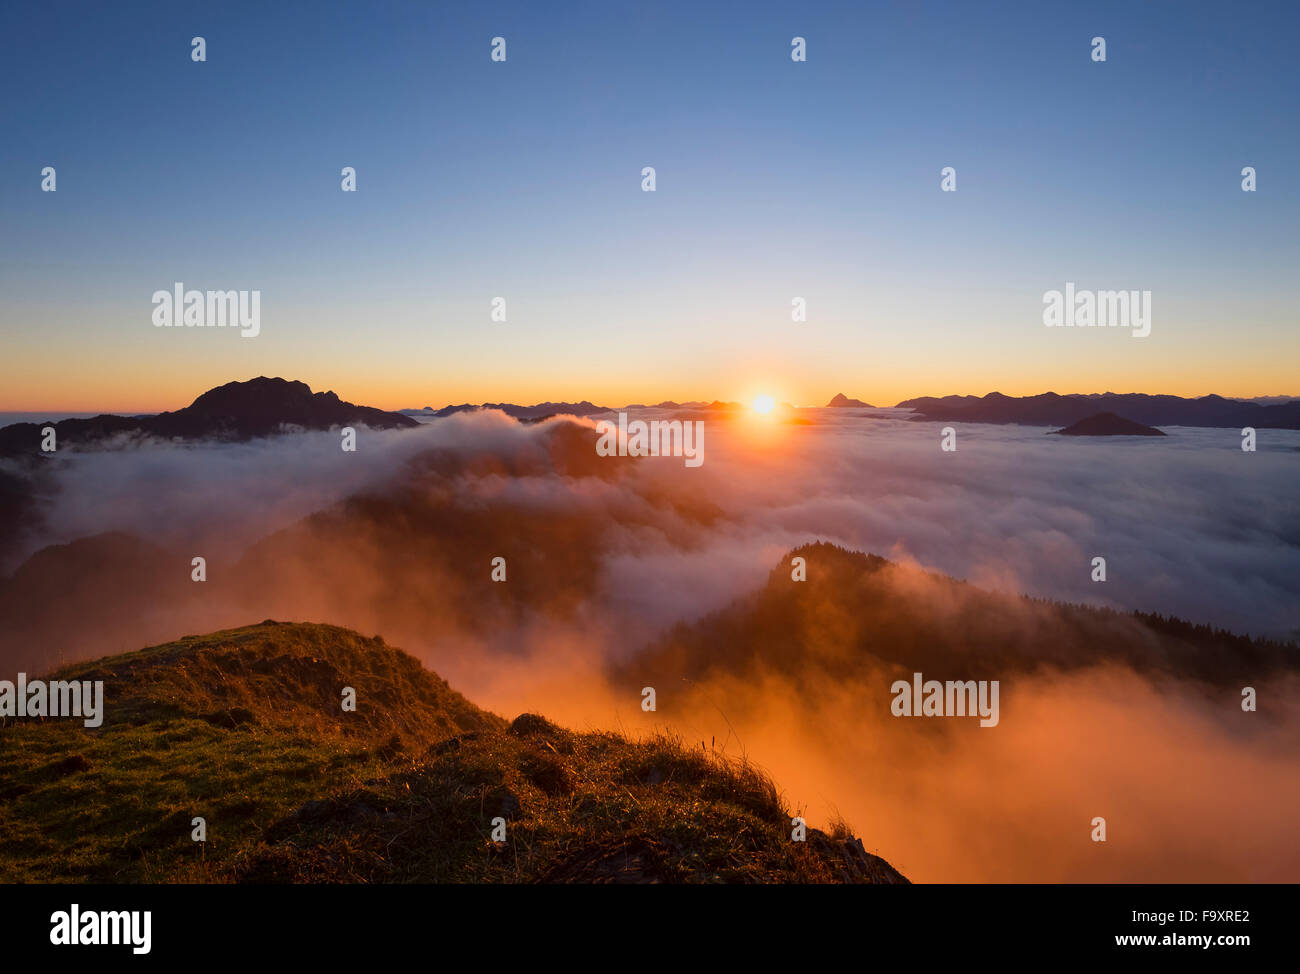 Germany, Bavaria, Bavarian Prealps, Sunset at Jochberg mountain, morning mood Stock Photo